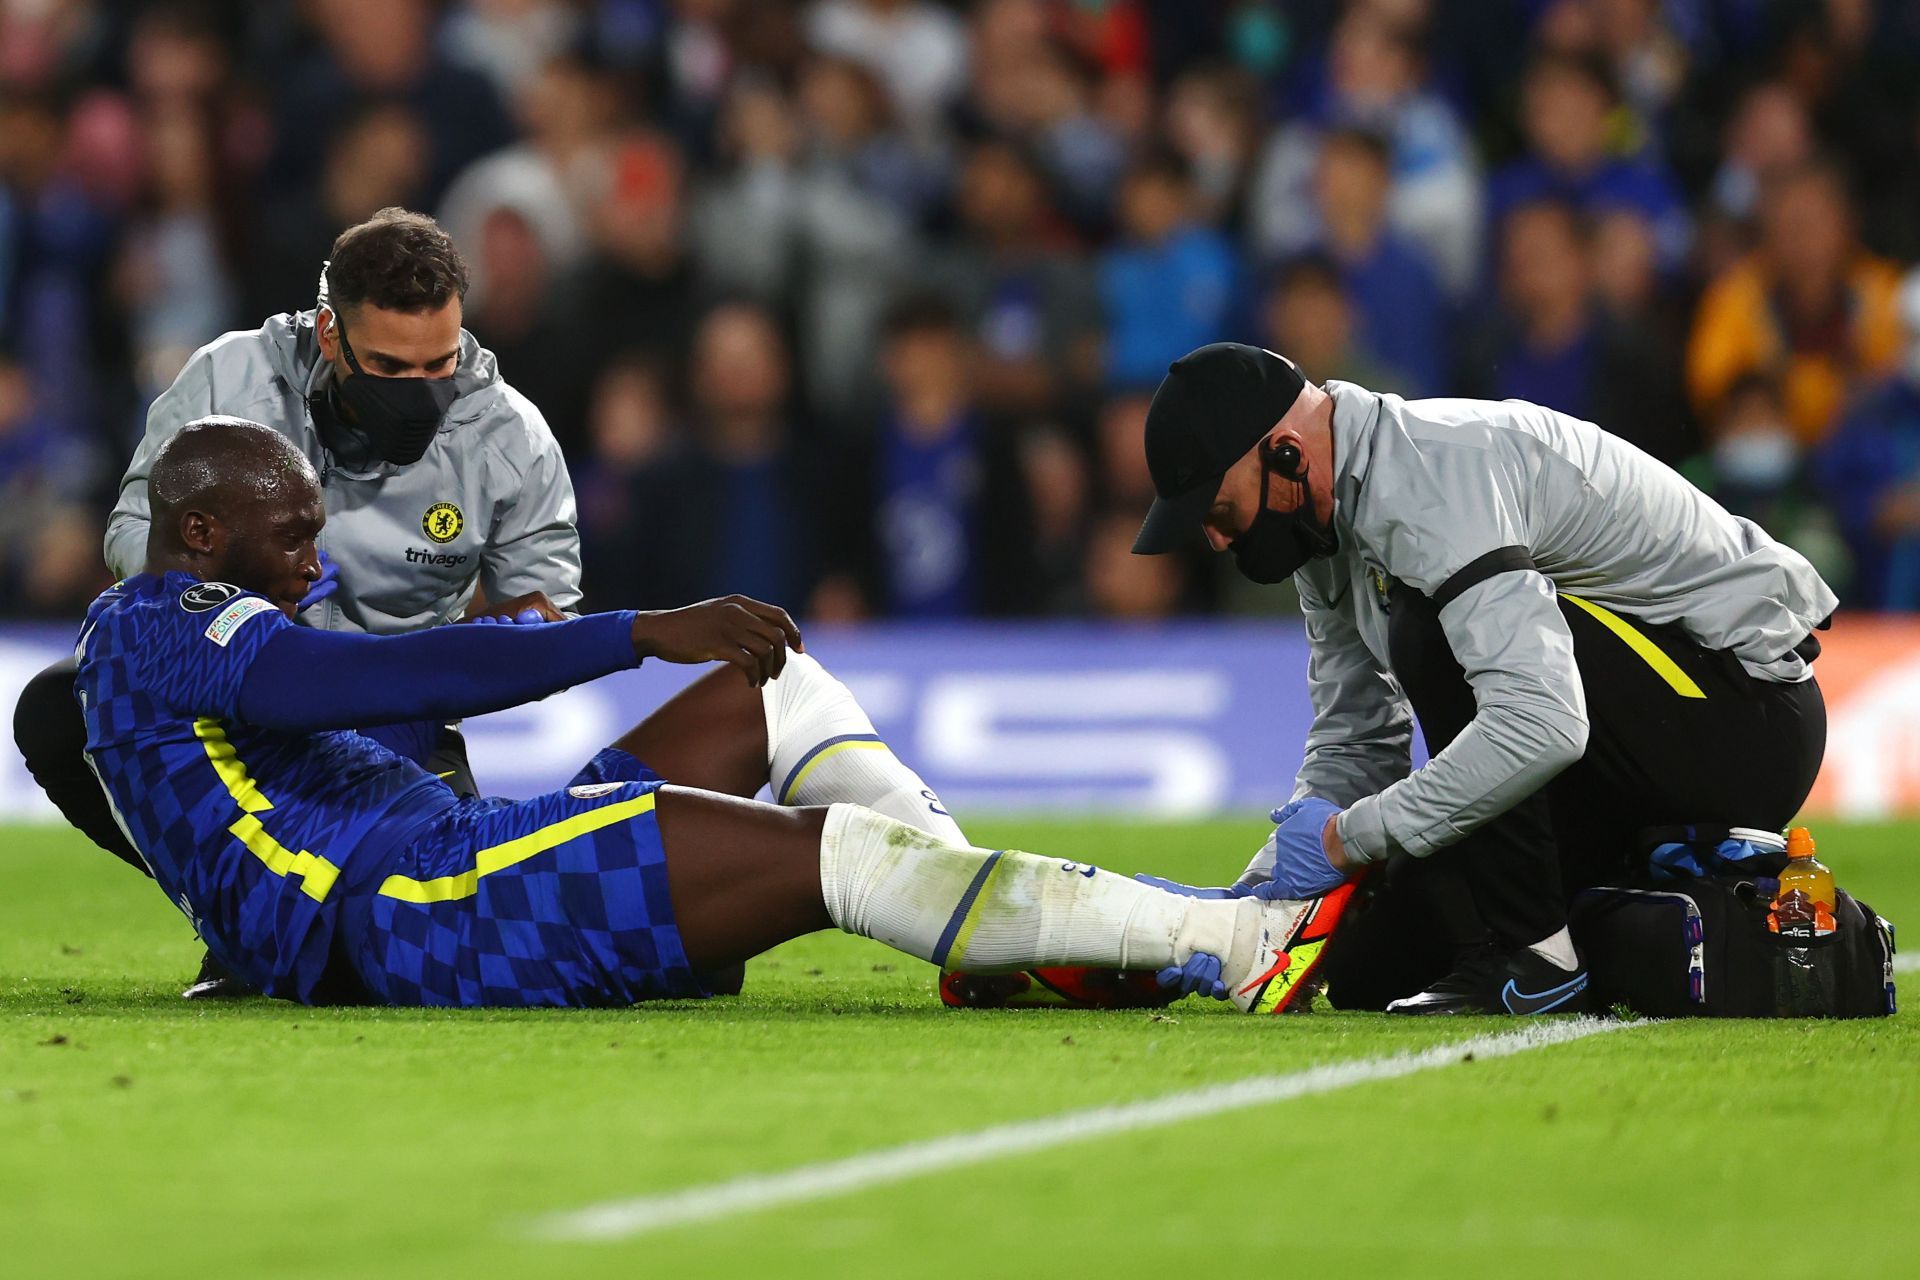 Romelu Lukaku receives medical treatment during the game.